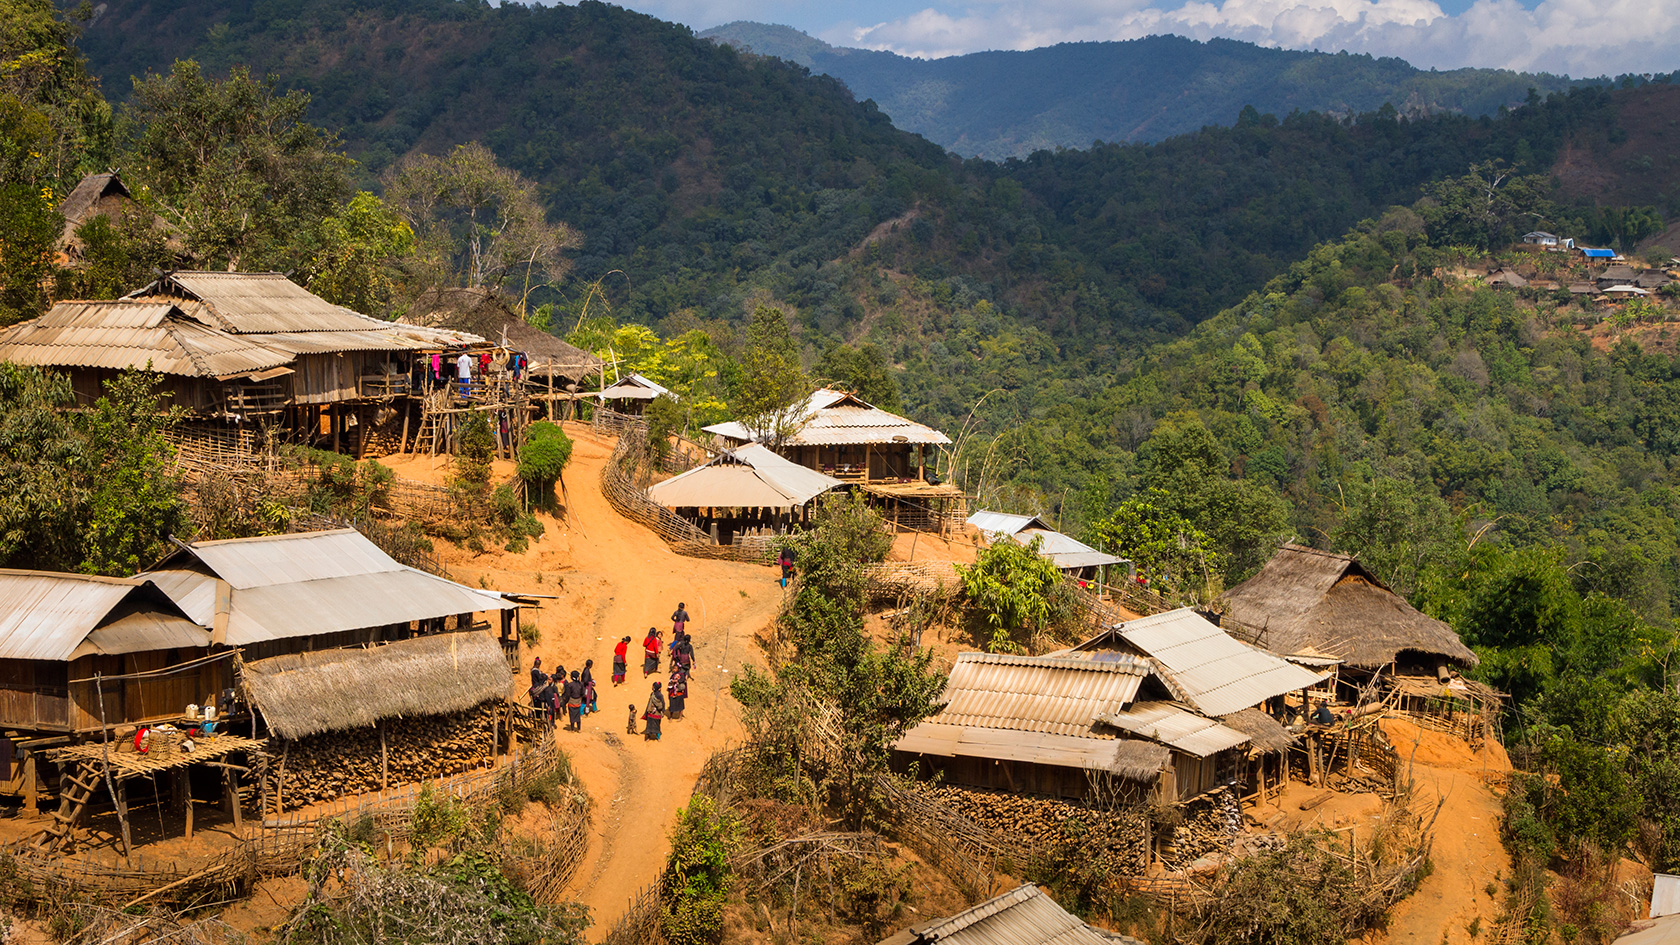 MEET THE HILLTRIBES OF MYANMAR